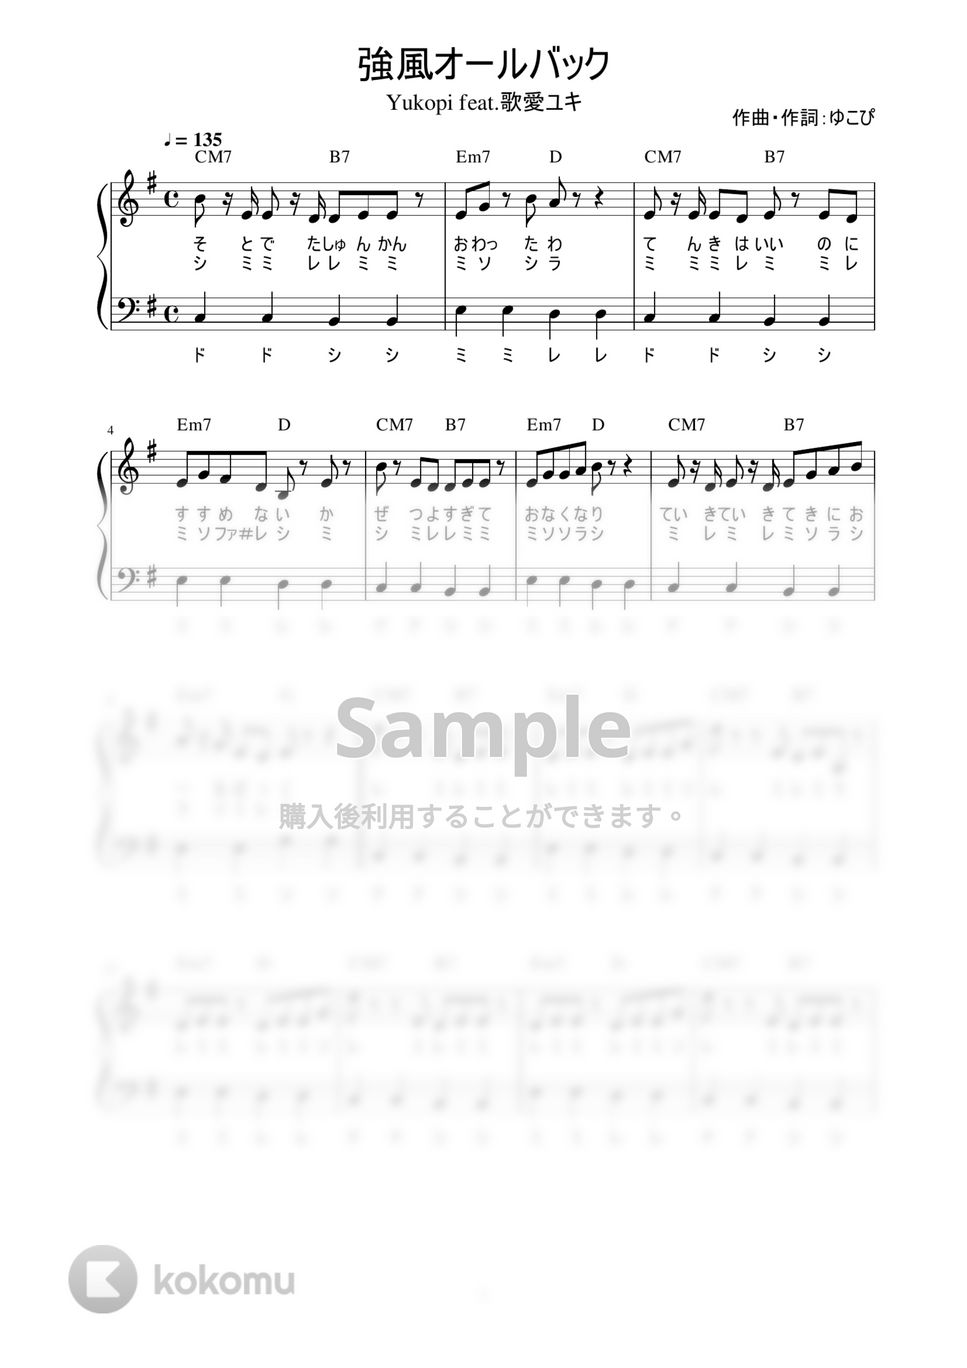 Yukopi feat.歌愛ユキ - 強風オールバック (かんたん / 歌詞付き / ドレミ付き / 初心者) by piano.tokyo